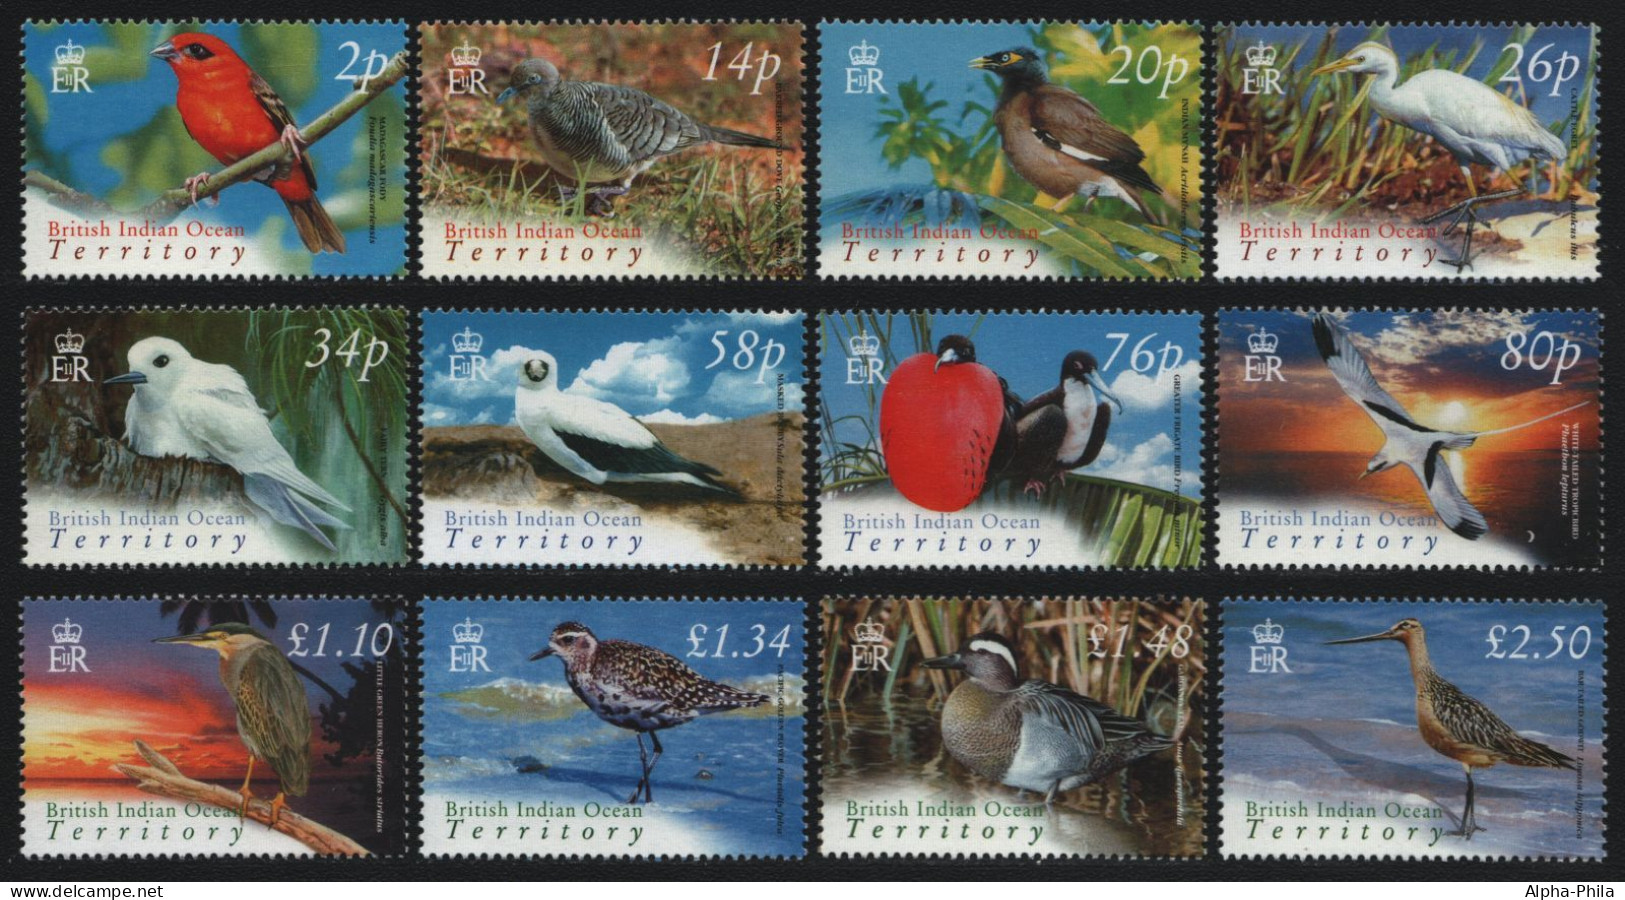 BIOT 2004 - Mi-Nr. 340-351 ** - MNH - Vögel / Birds (II) - British Indian Ocean Territory (BIOT)